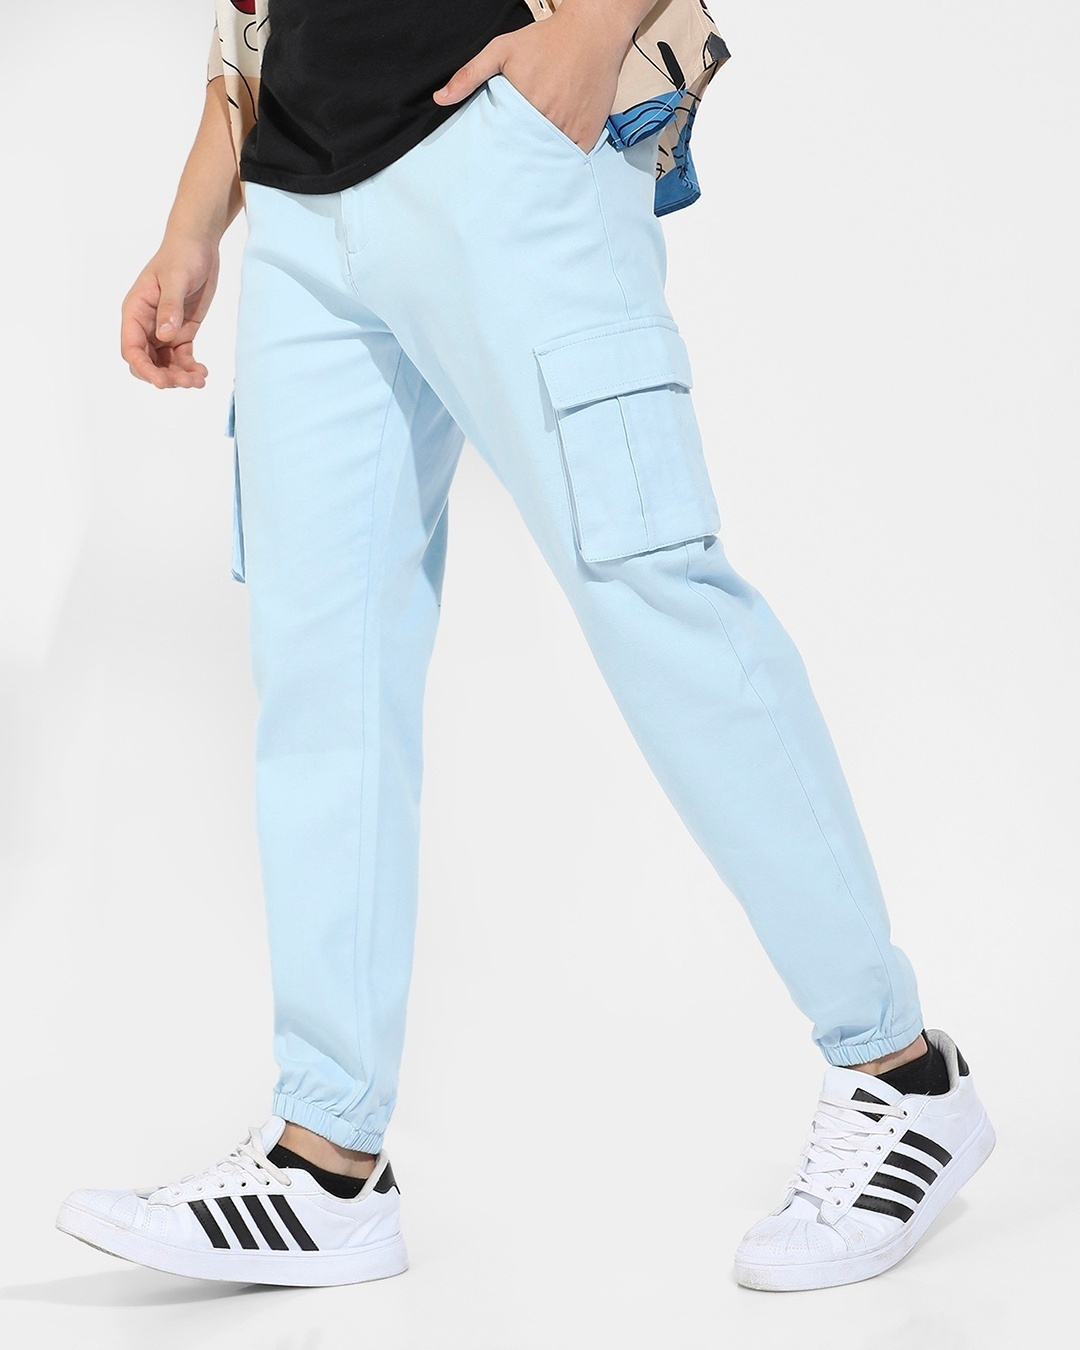 Buy Men's Light Blue Cargo Trousers Online at Bewakoof